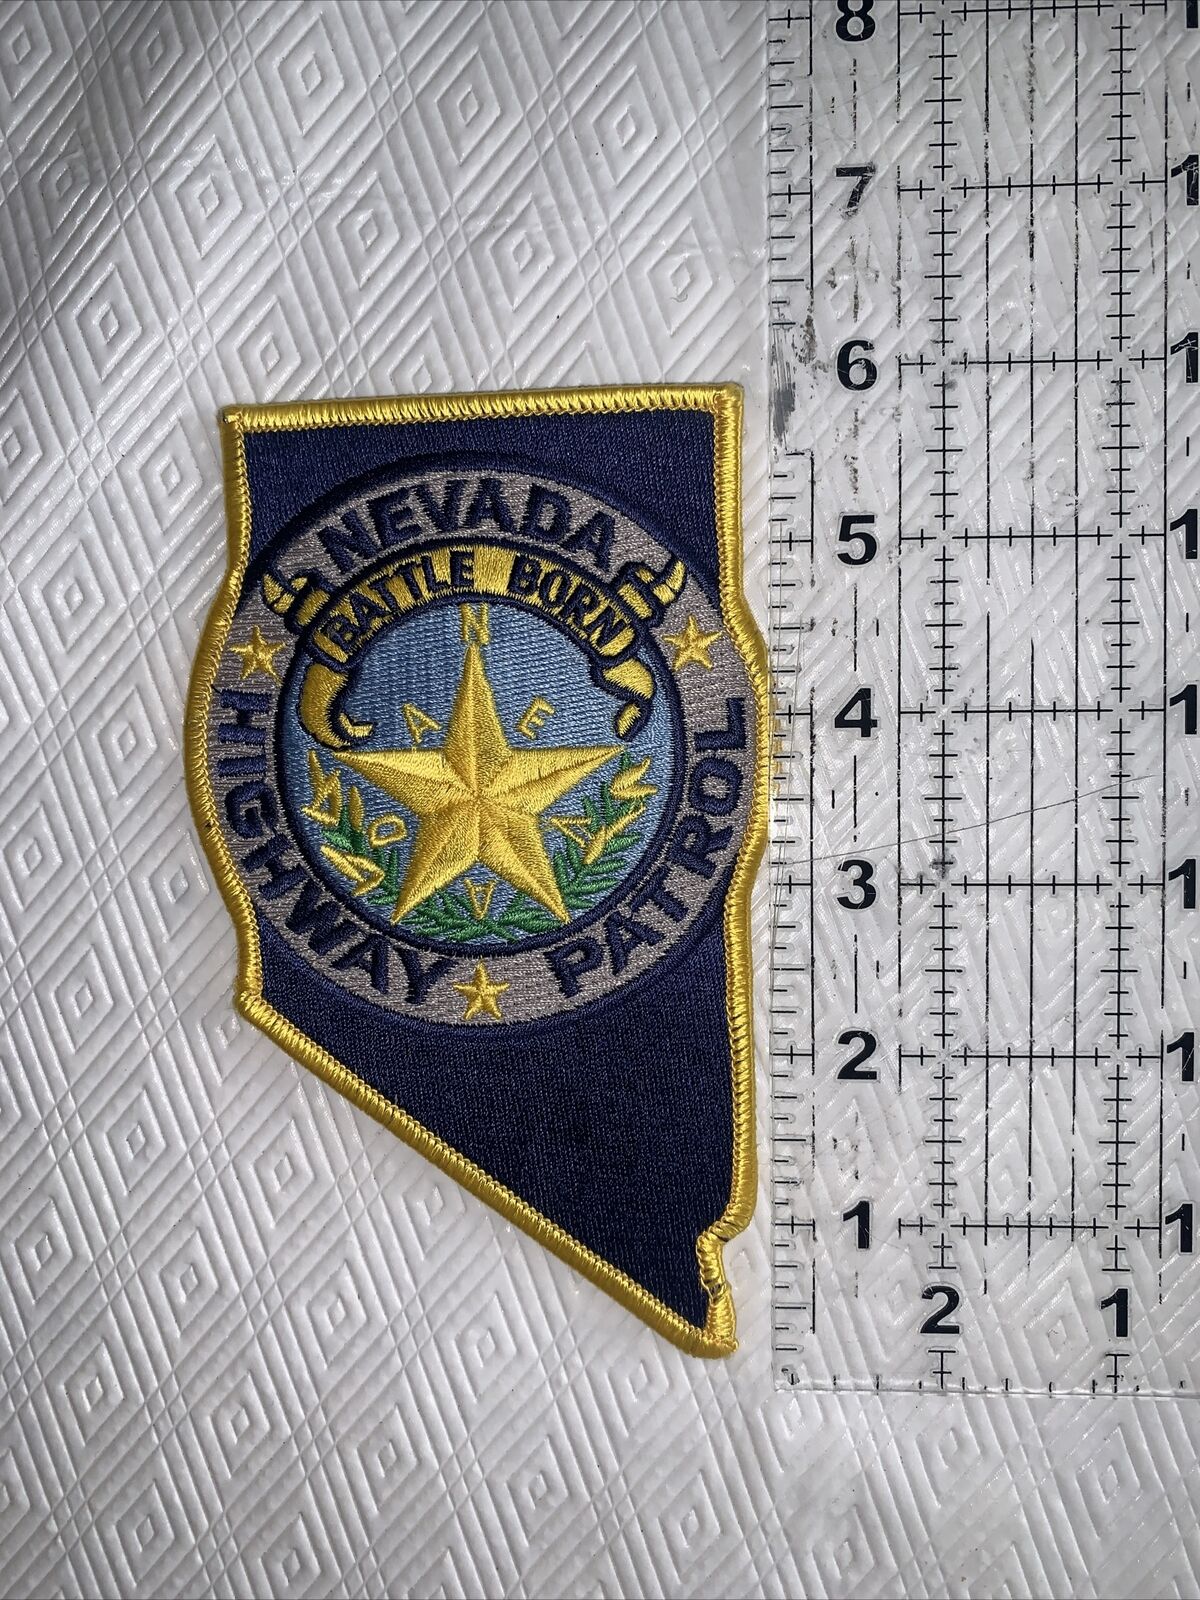 Highway Patrol Police Patch Nevada